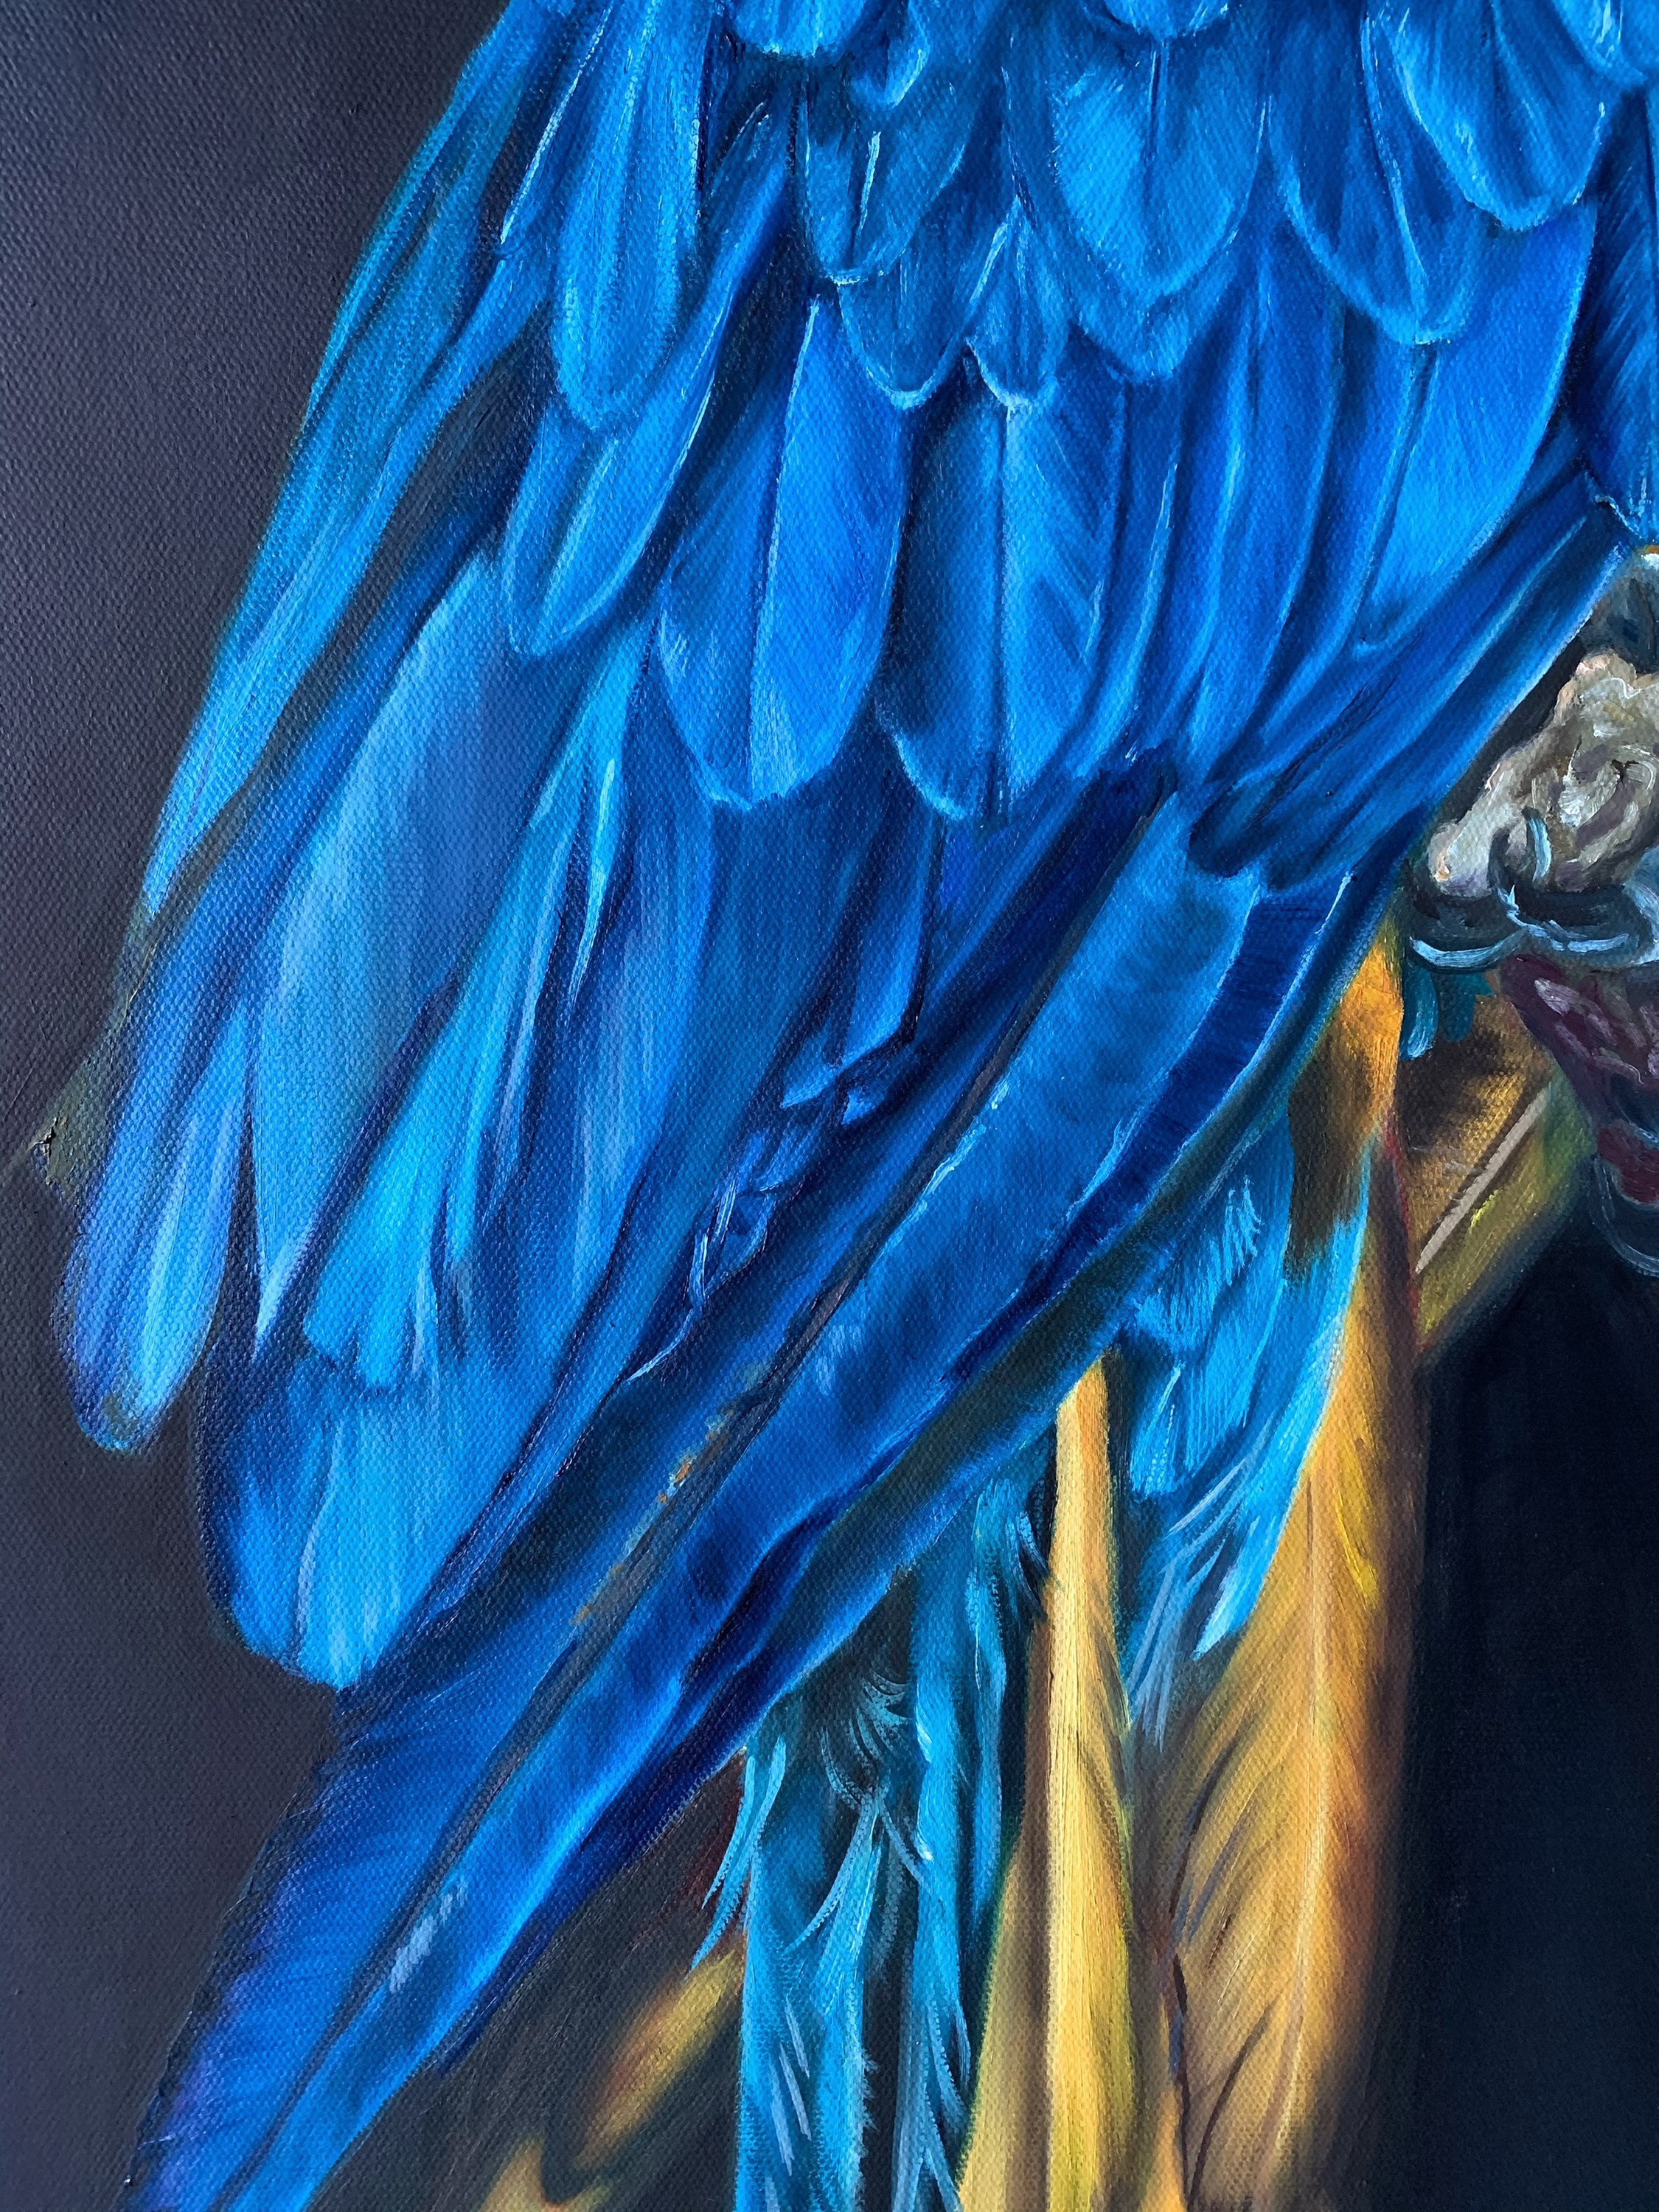 Macaw original painting. Original painting. Oil painting. blue | Etsy